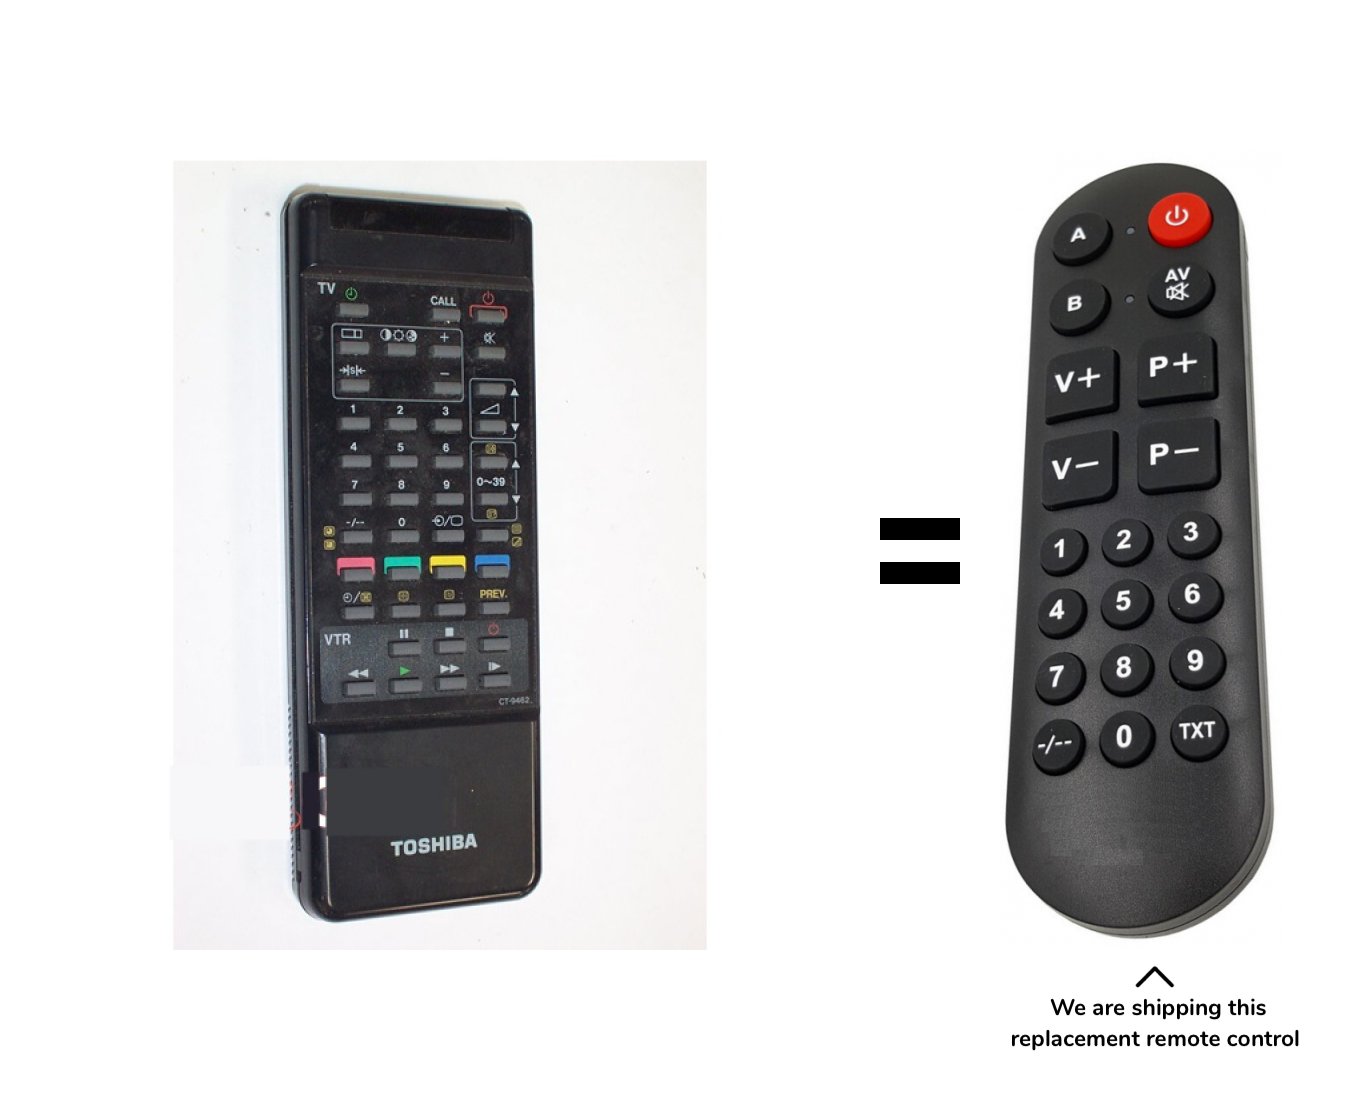 Toshiba 1720RT remote control for seniors